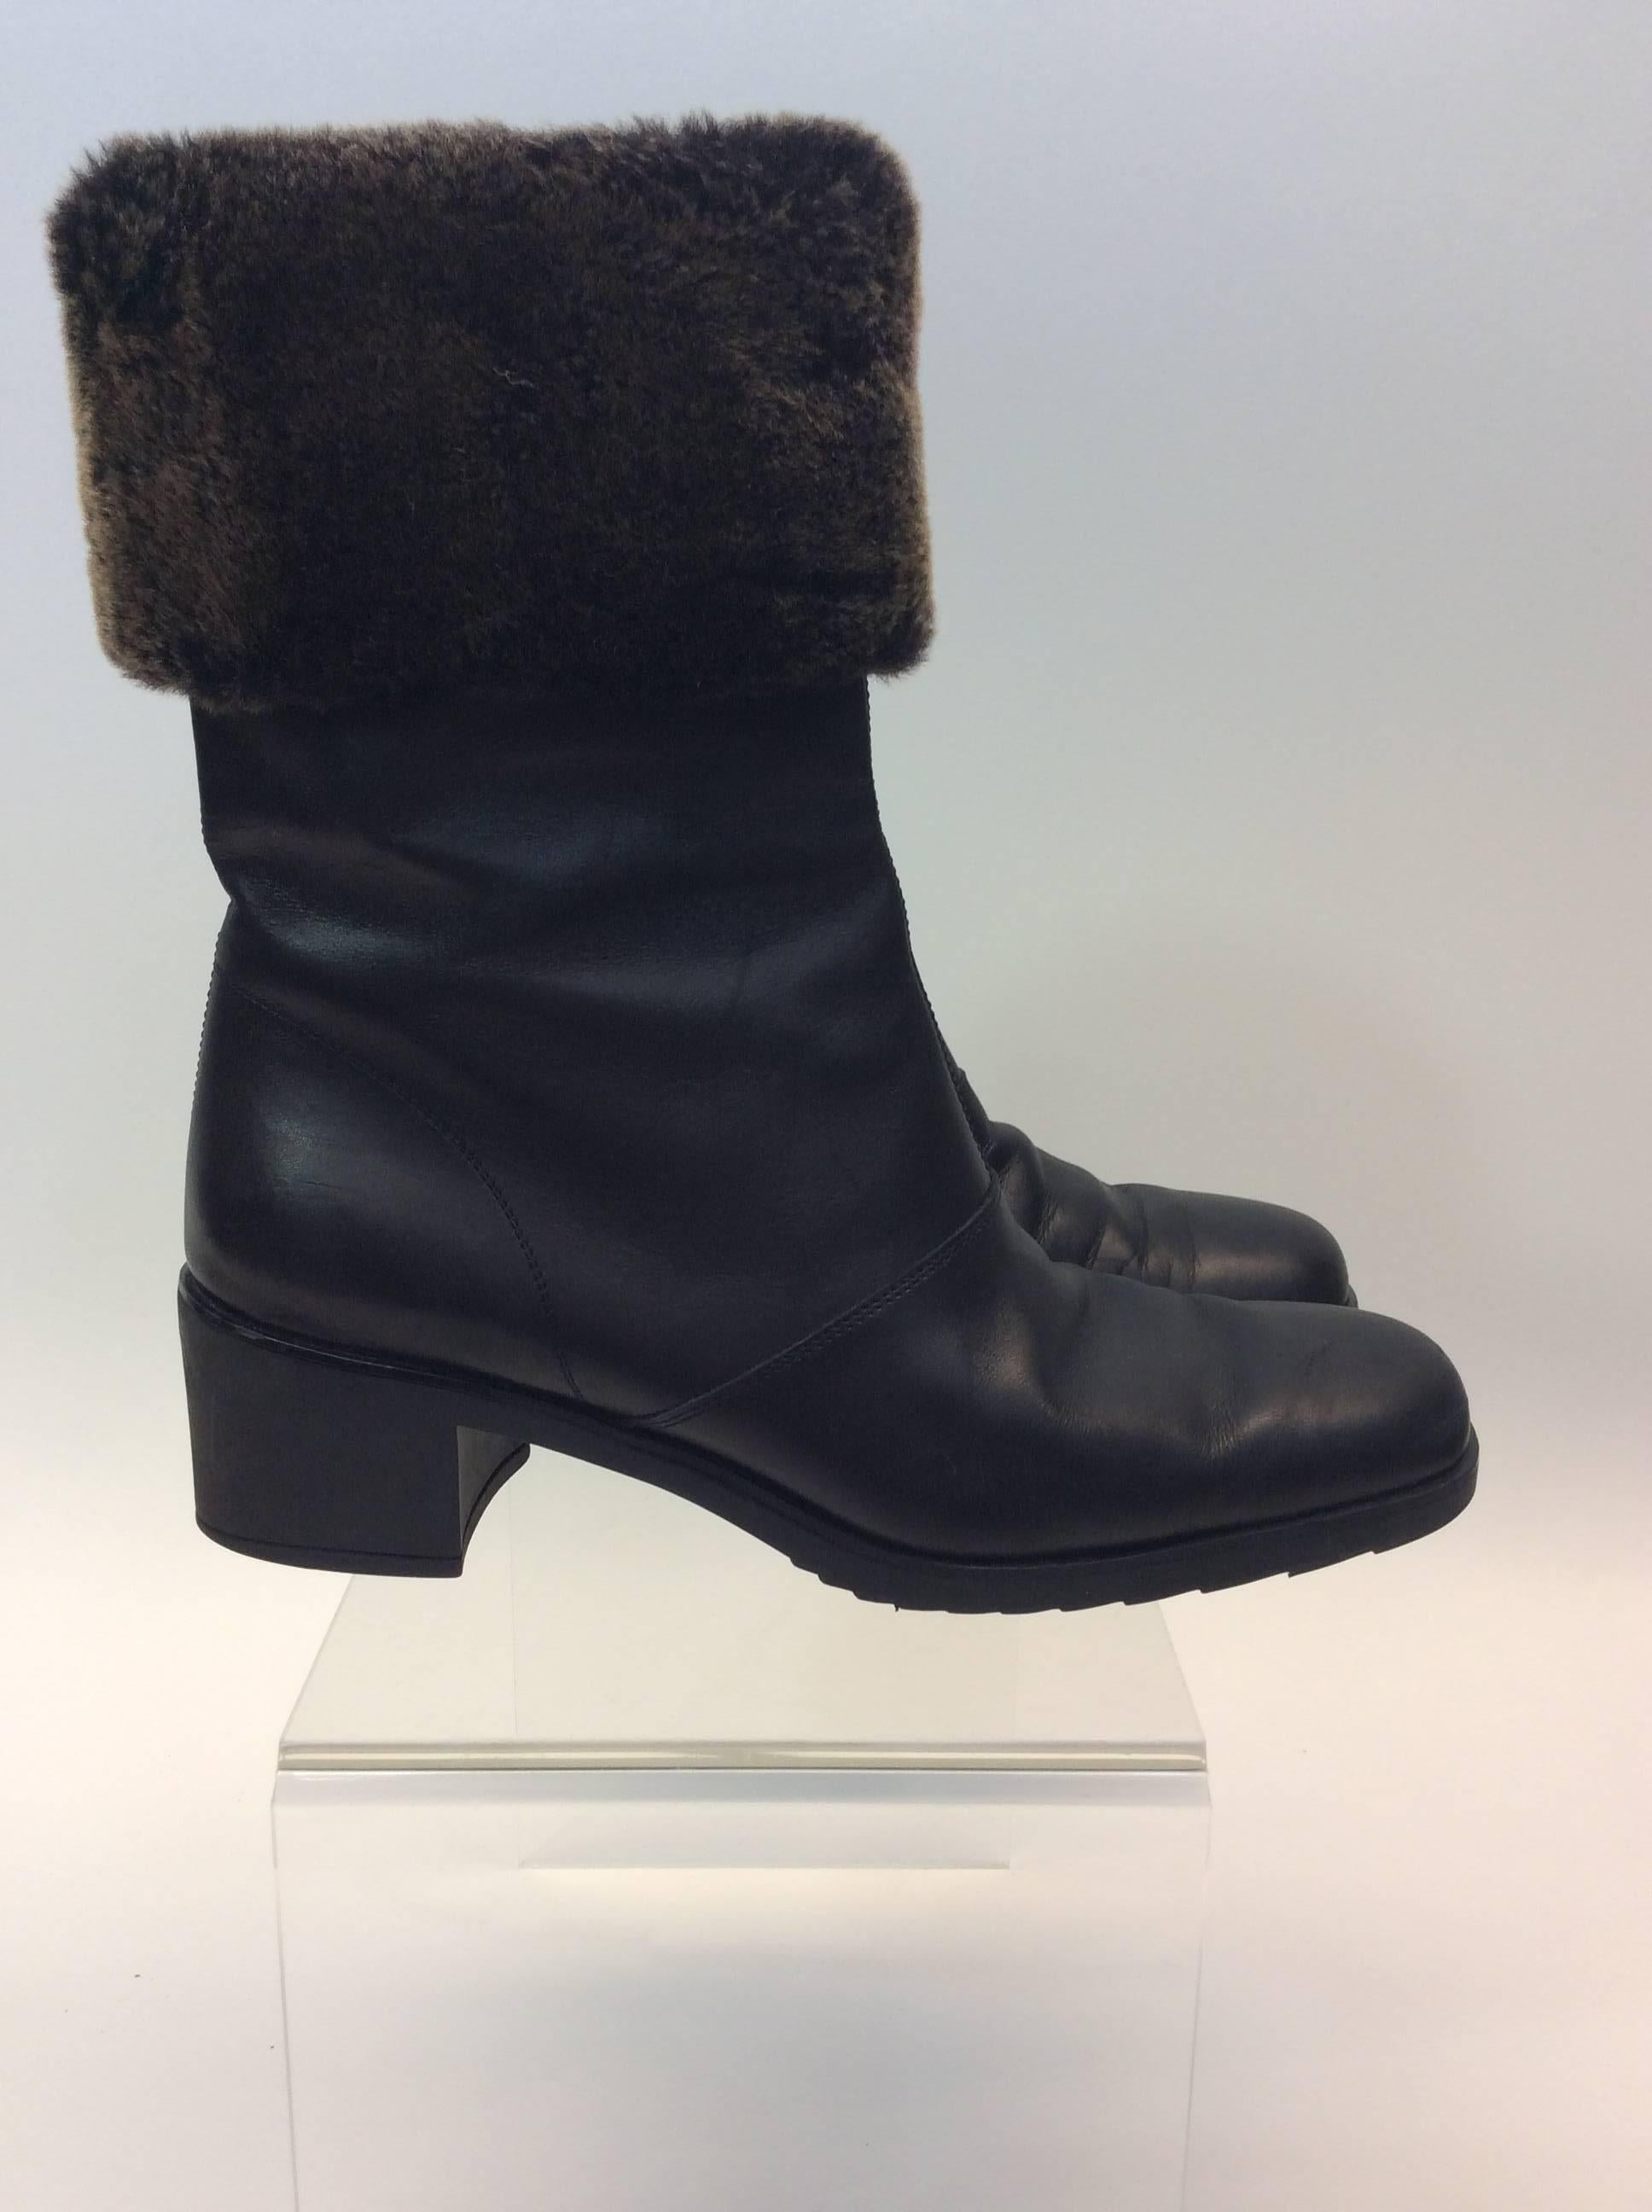 Salvatore Ferragamo Black Leather and Shearling Boot
Size 6.5
$299
Heel 2